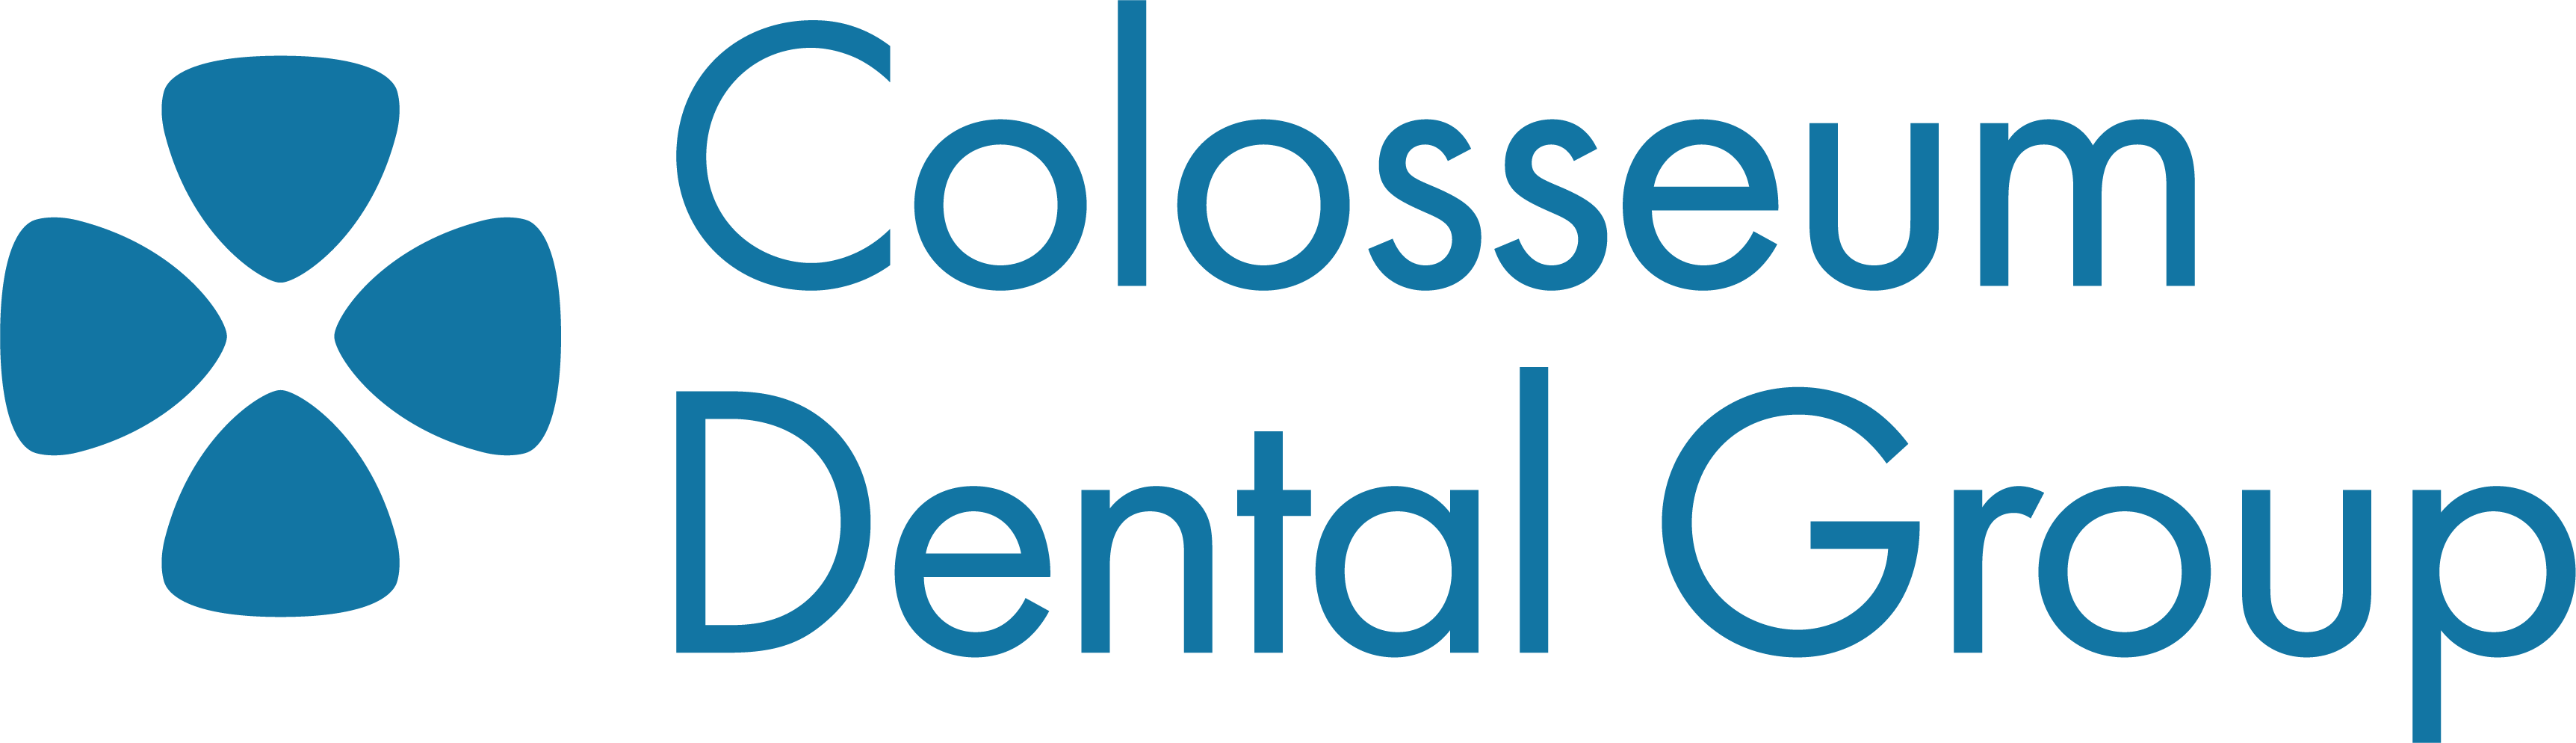 Image of Colosseum dental logo